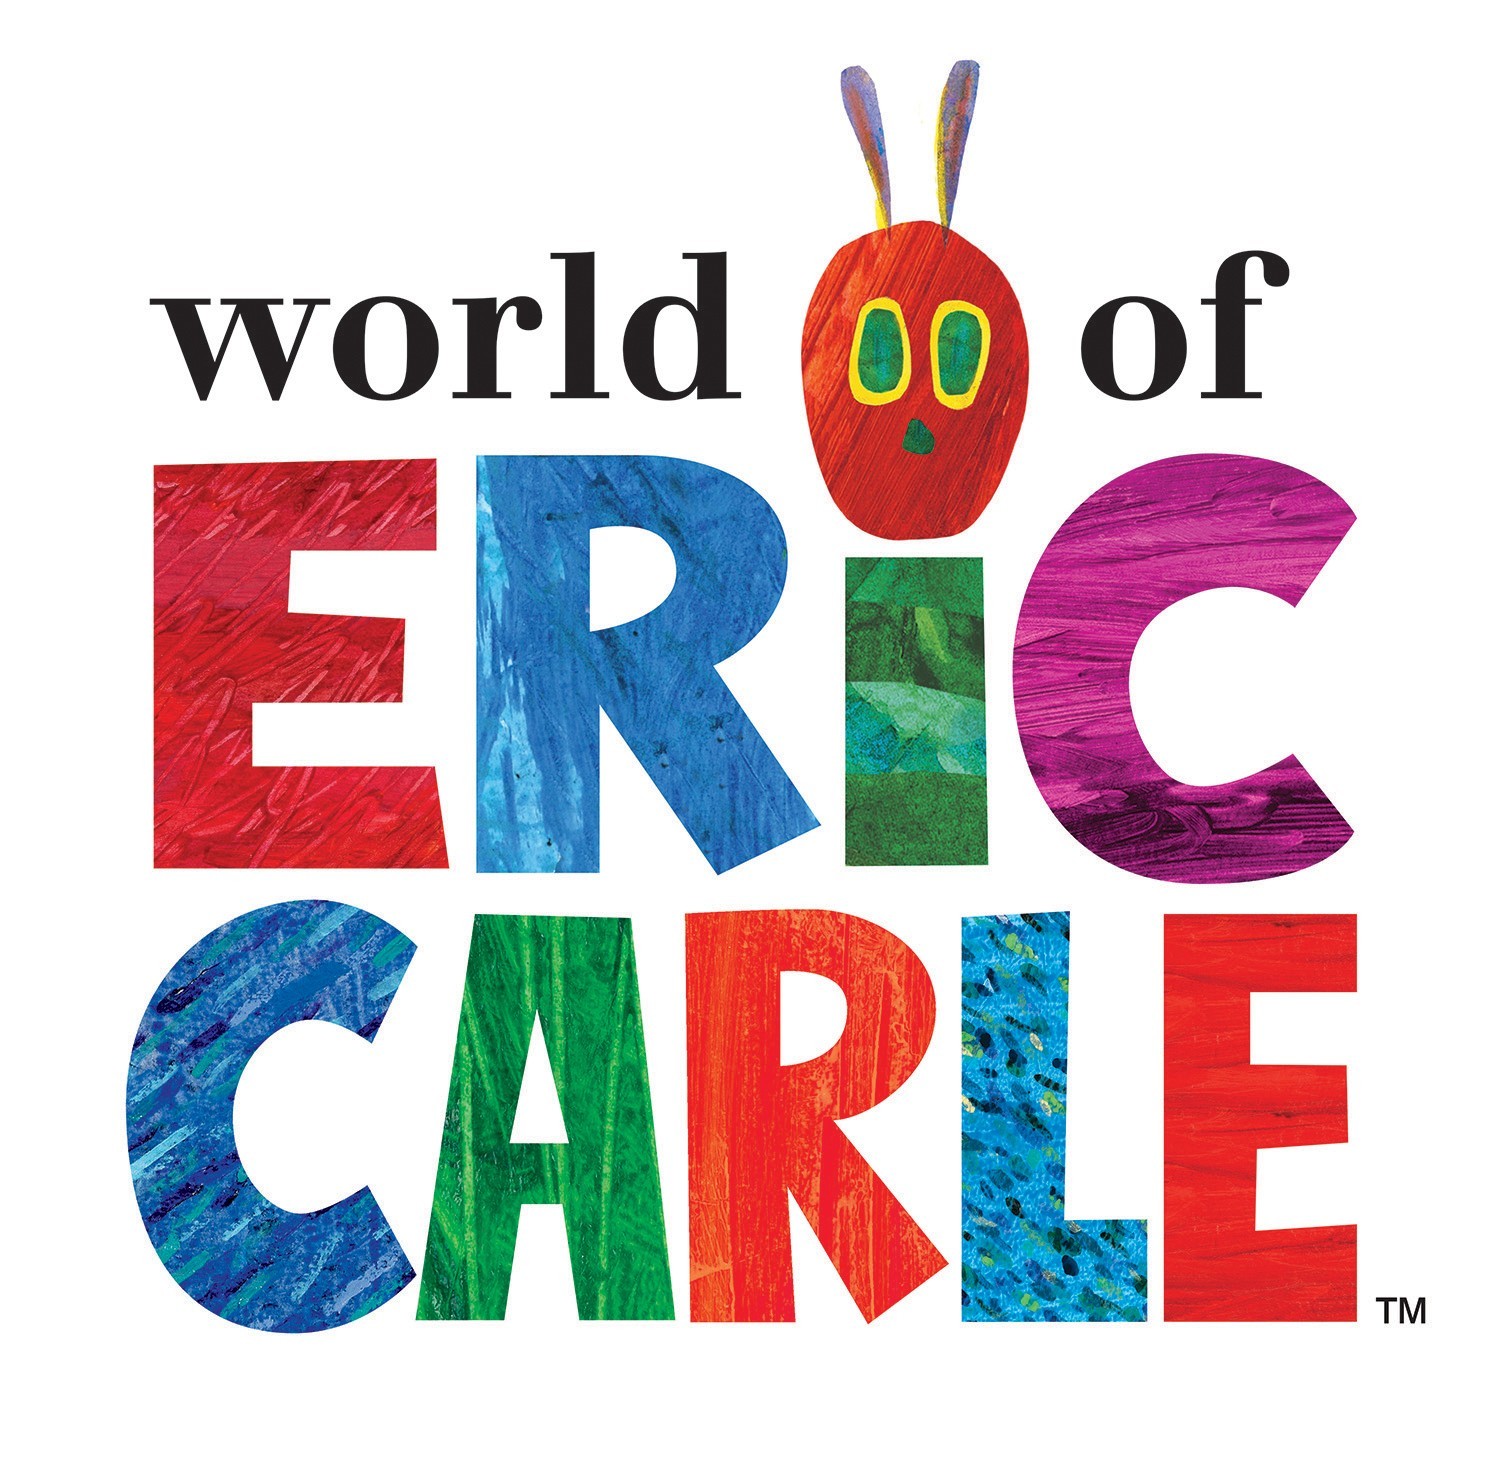 World of Eric Carle